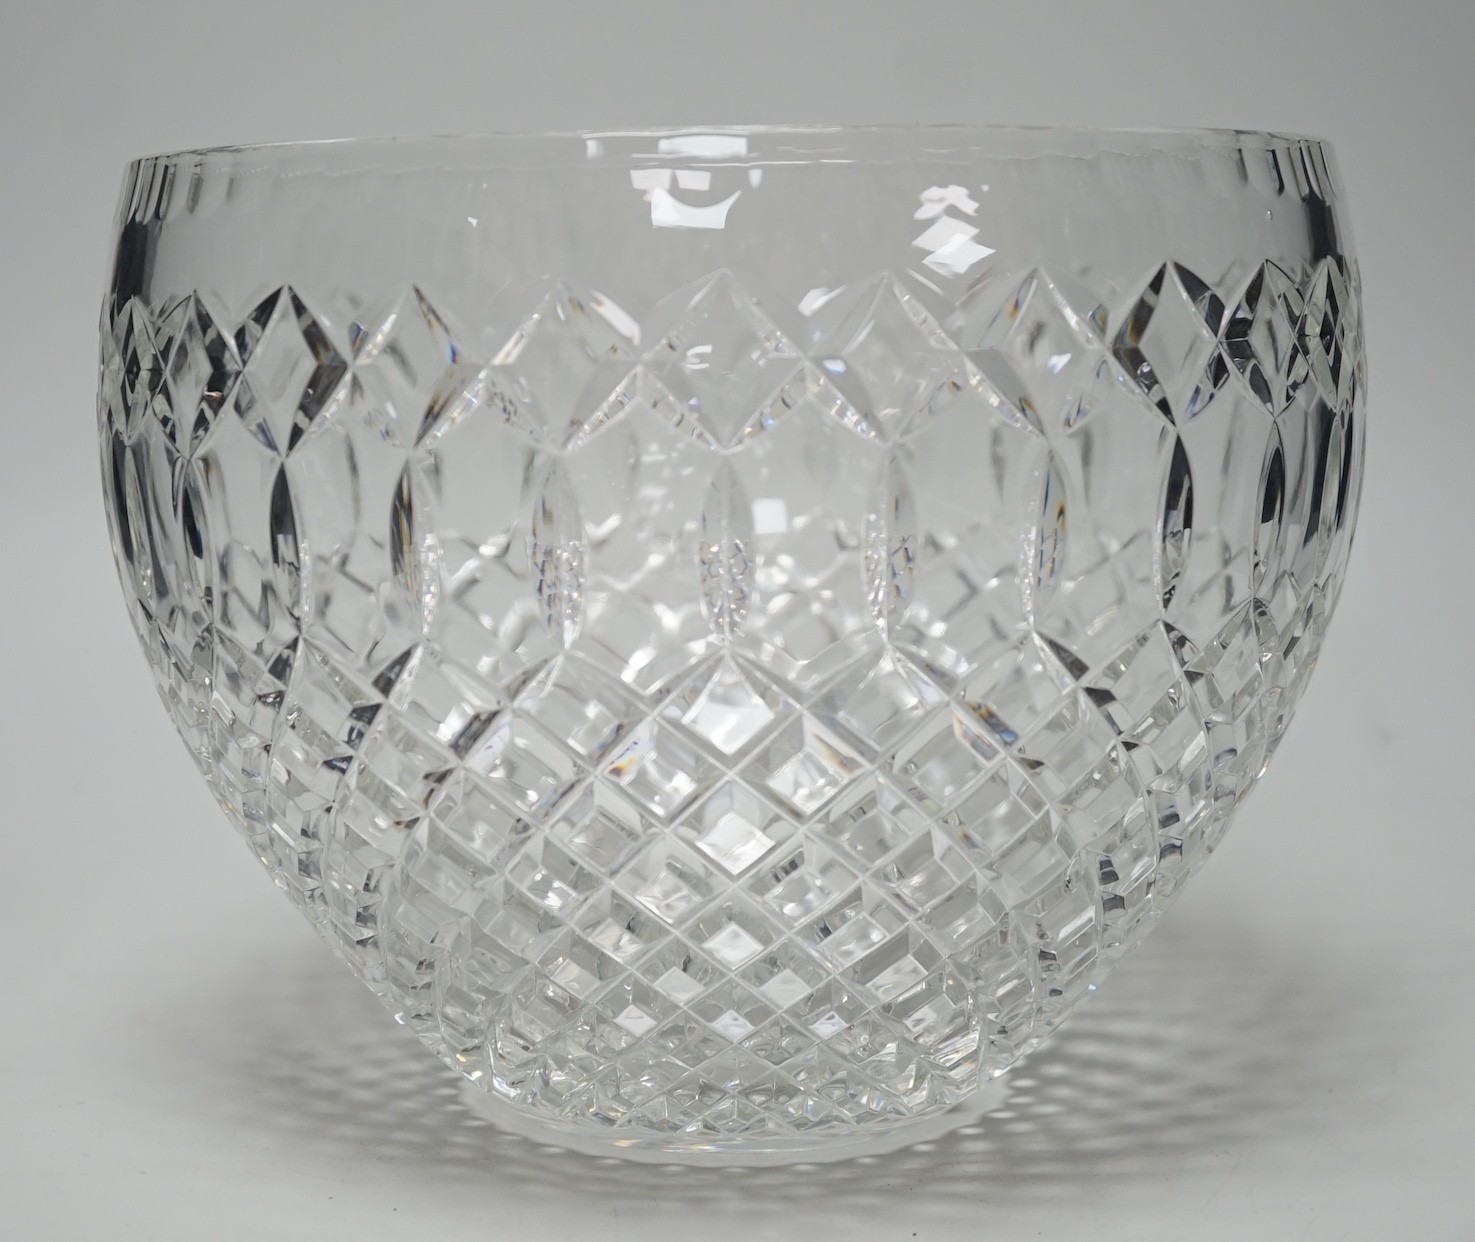 A cut glass bowl, 20cms high